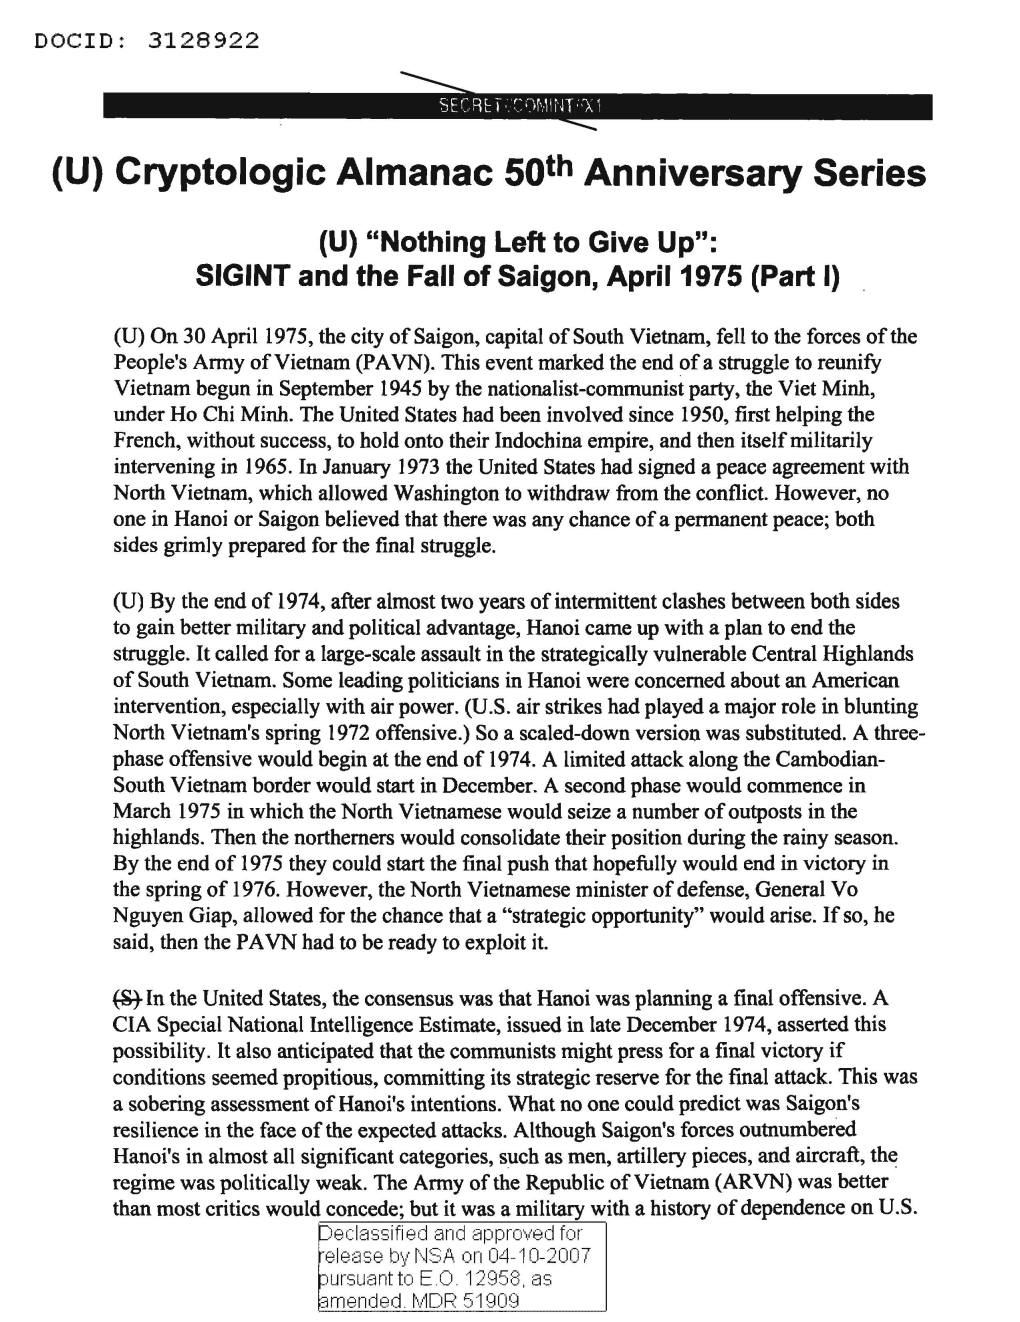 Cryptologic Almanac 5Qth Anniversary Series